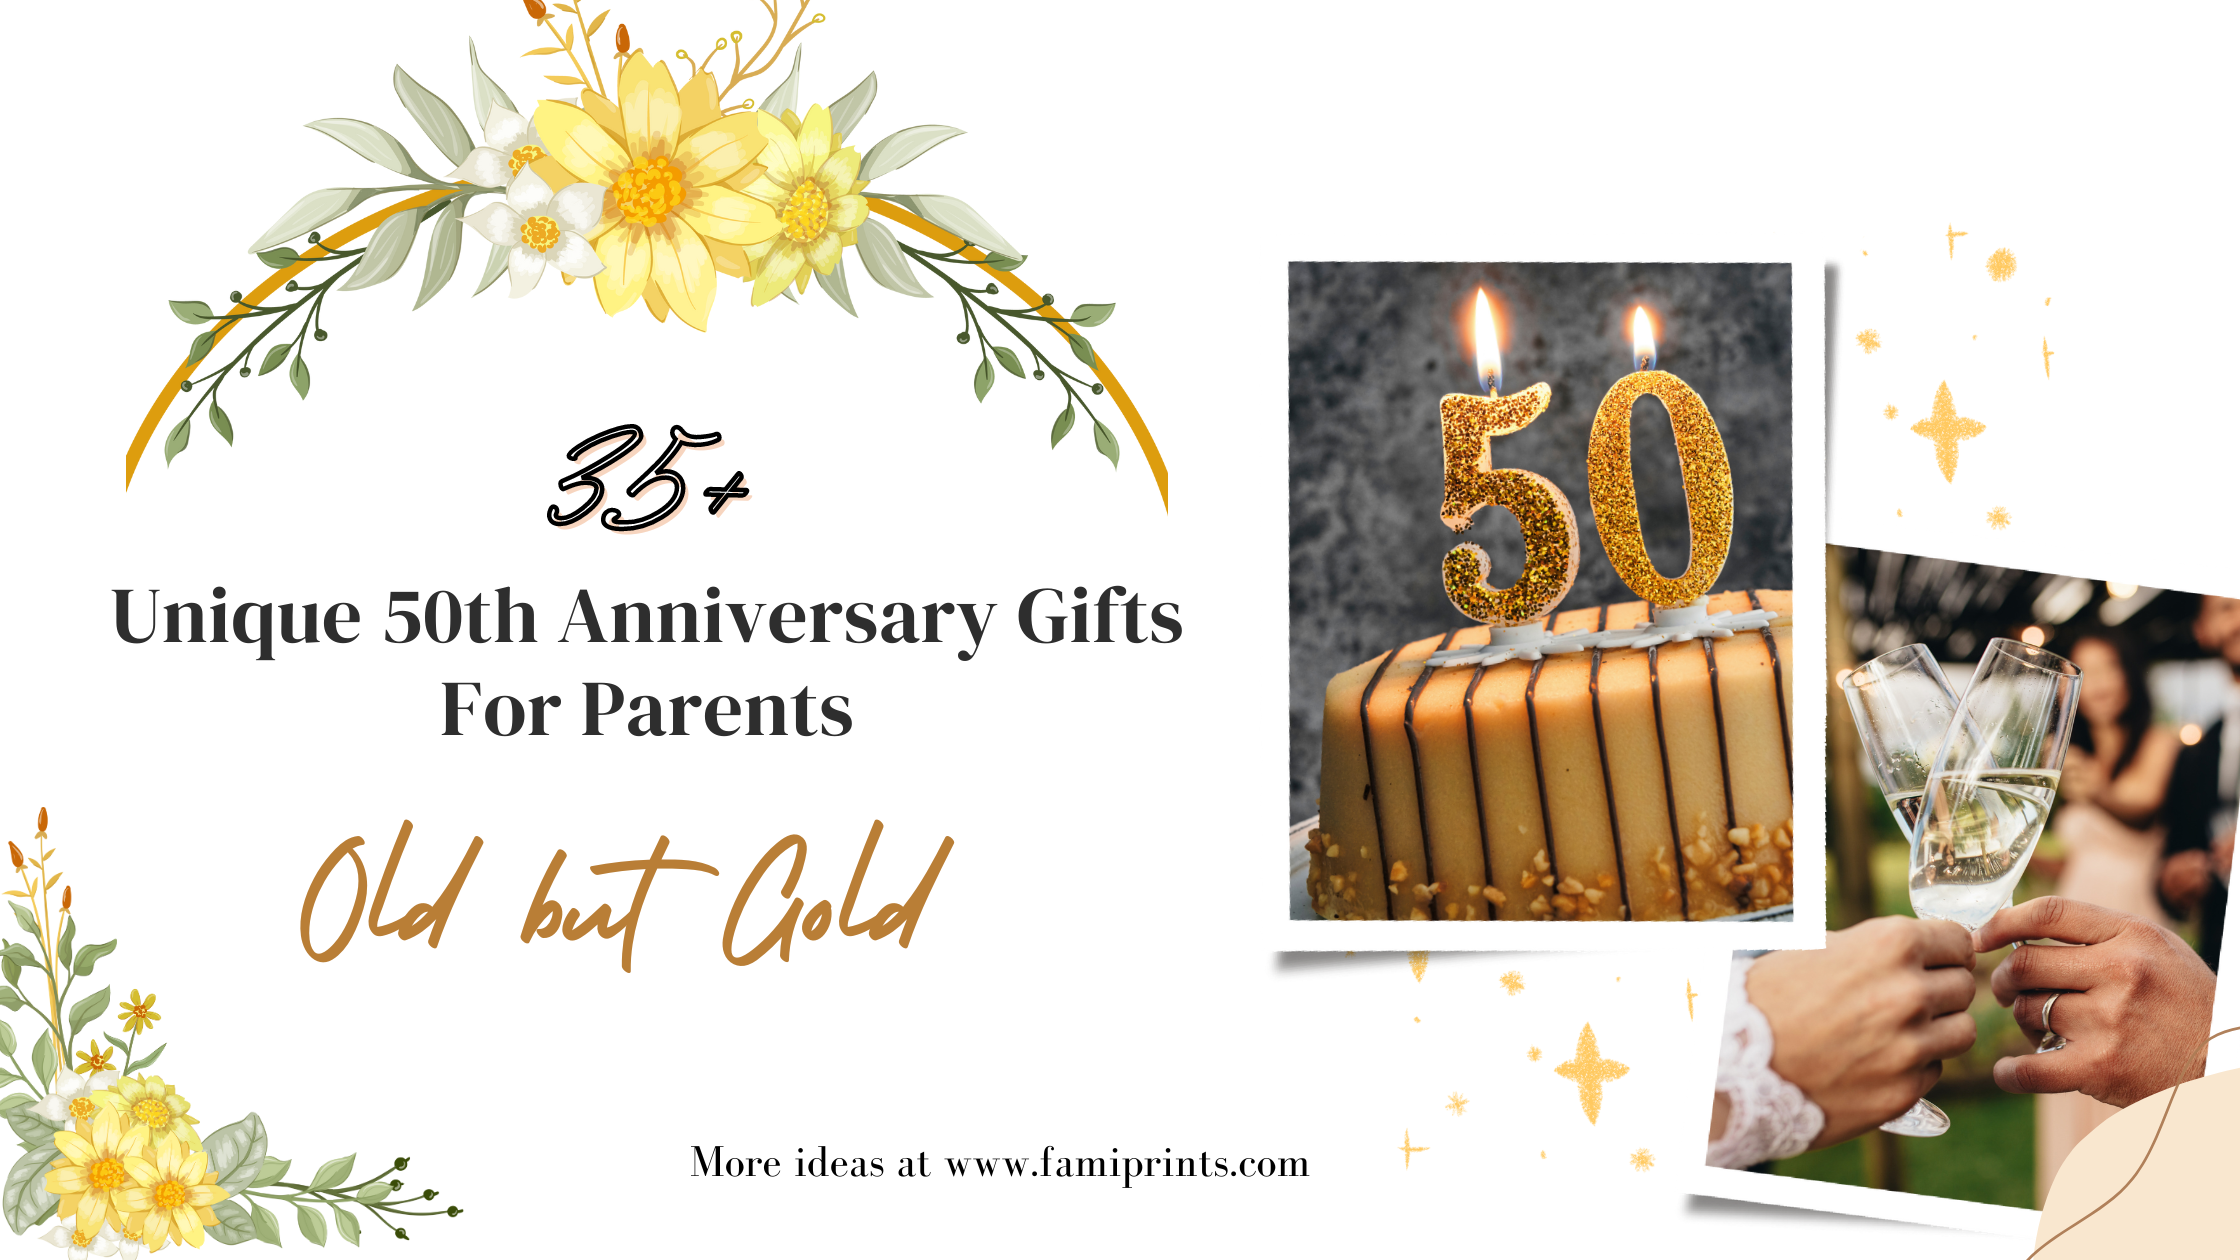 31 Best 50th Birthday Gift Ideas to Celebrate Their Milestone